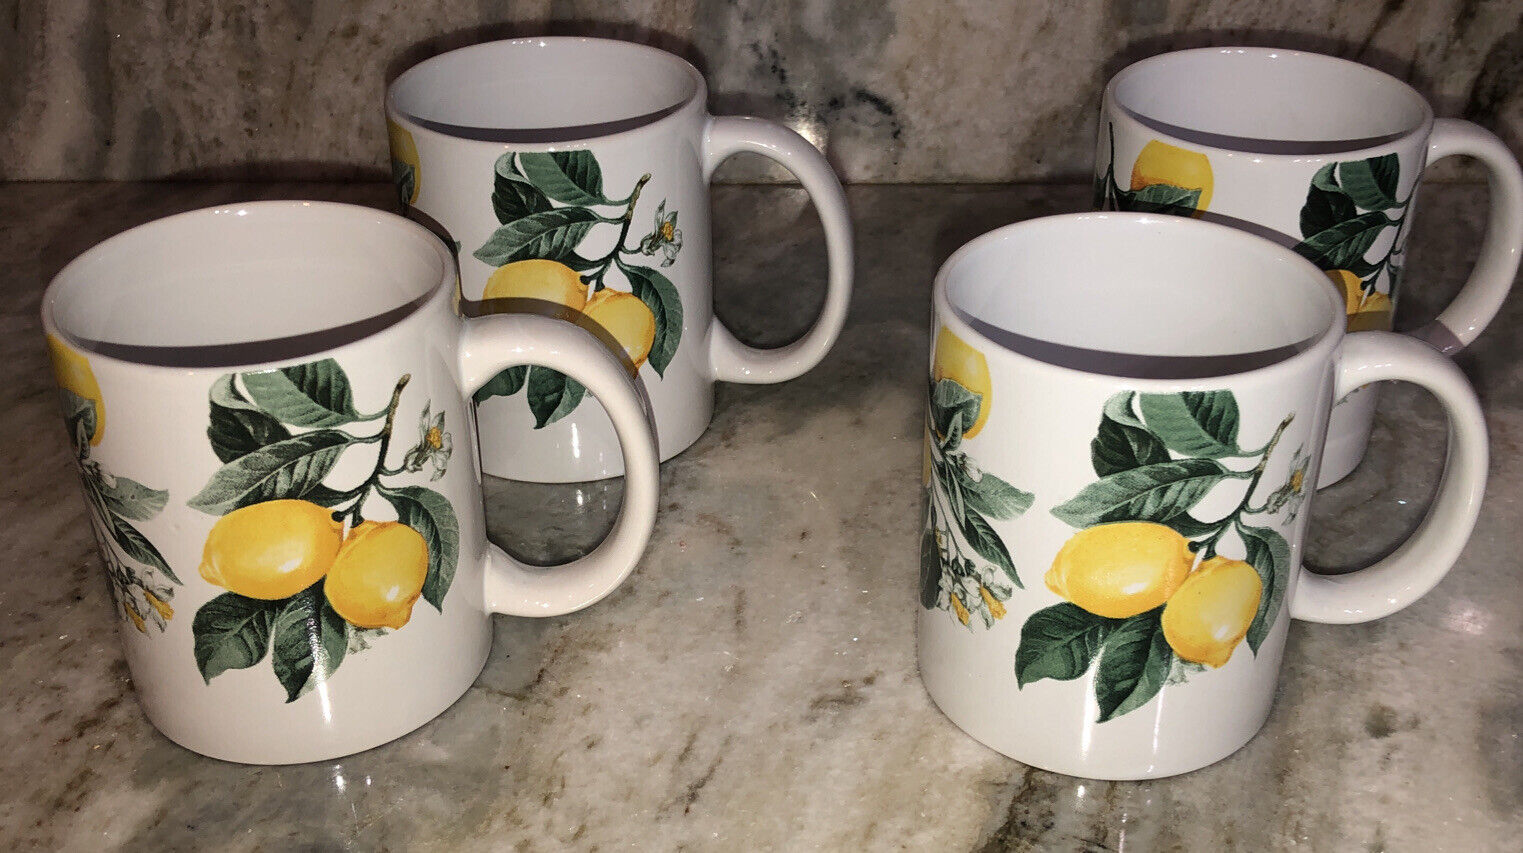 Coffee Tea Ceramic Cup Mug Set of 4 Royal Norfolk Lemons 12 oz NEW-SHIPS N 24HRS - $39.48